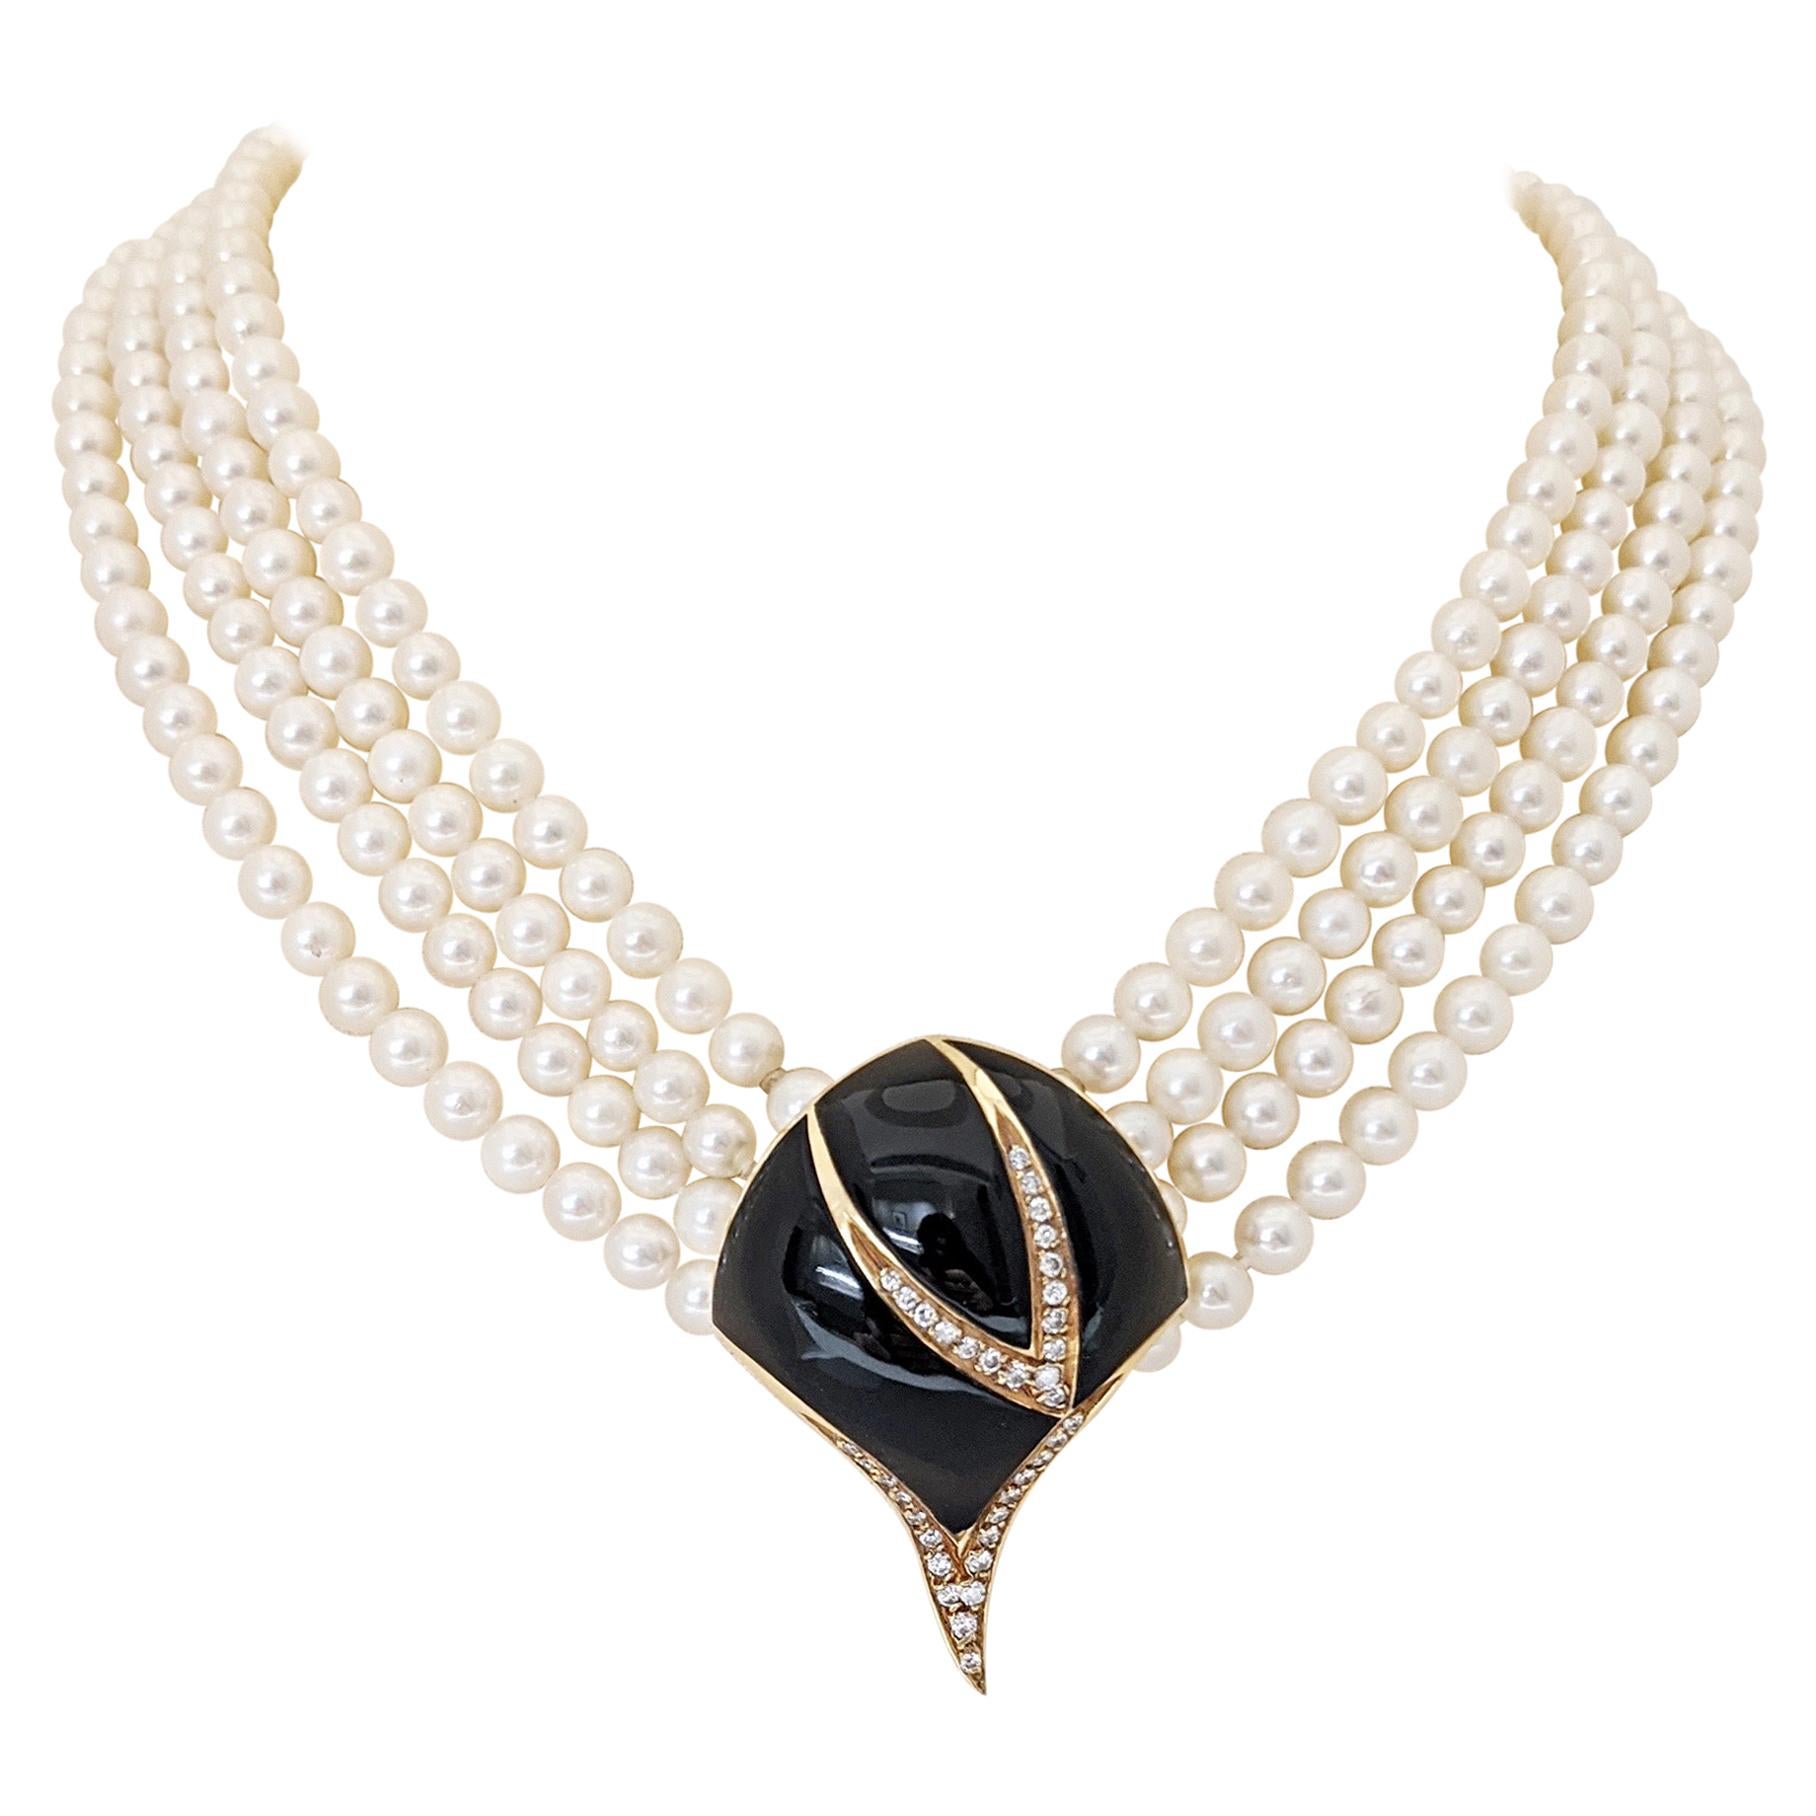 Retro Multi Strand Pearl Necklace with Black Onyx and .38 Carat Diamond Clasp